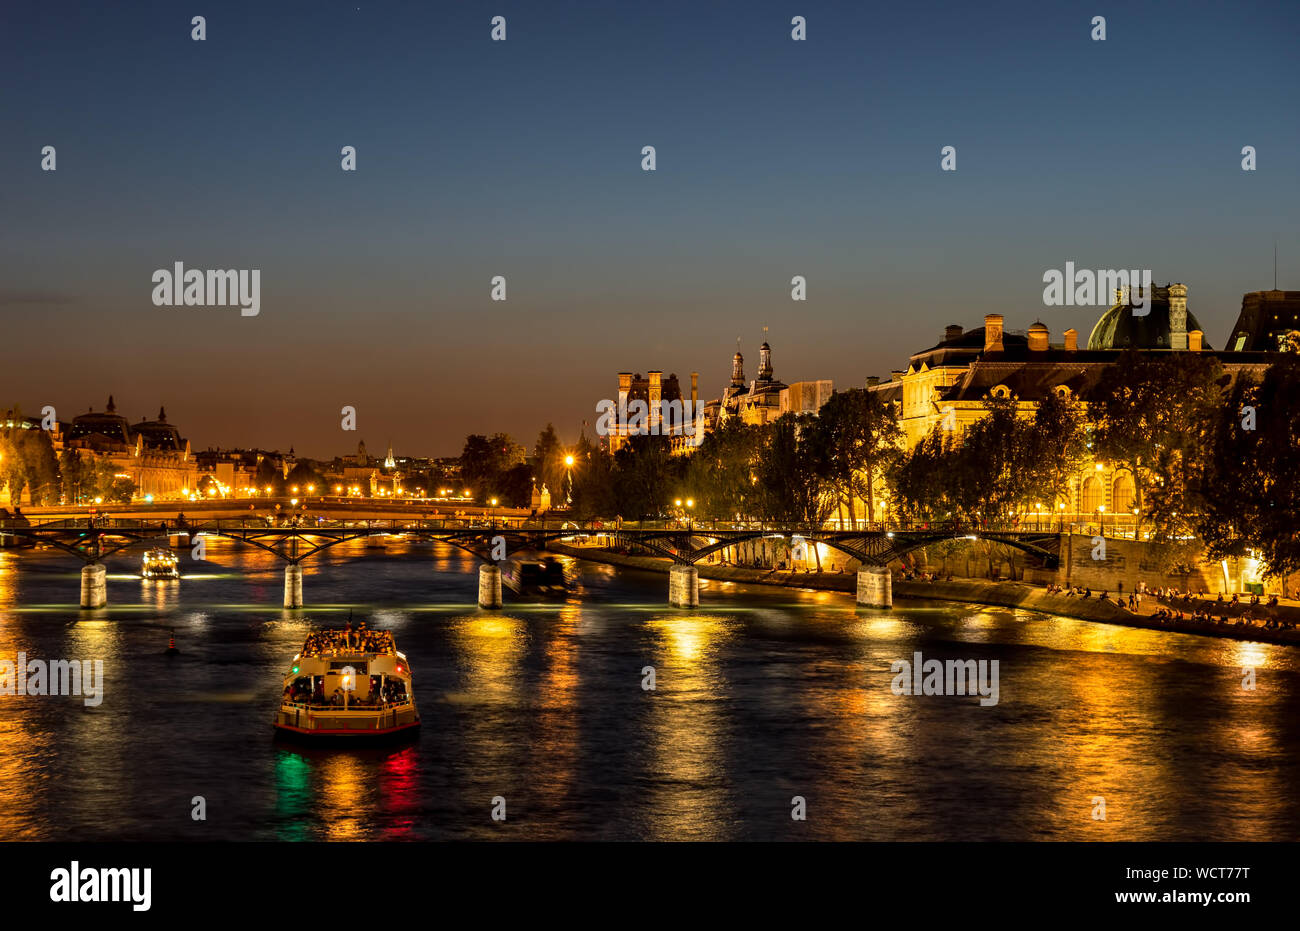 Pont des arts at nightfall - Paris, France Stock Photo